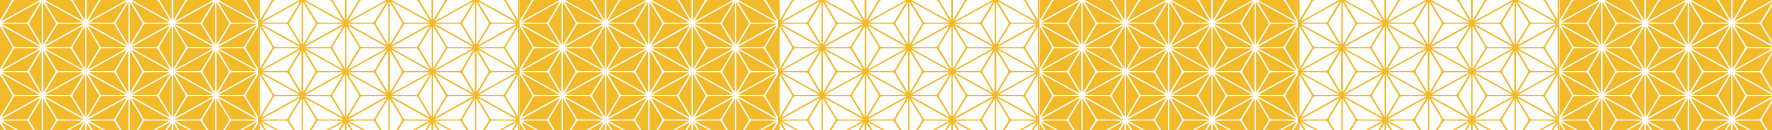 Washi Tape Streifen Asanoha Muster gelb